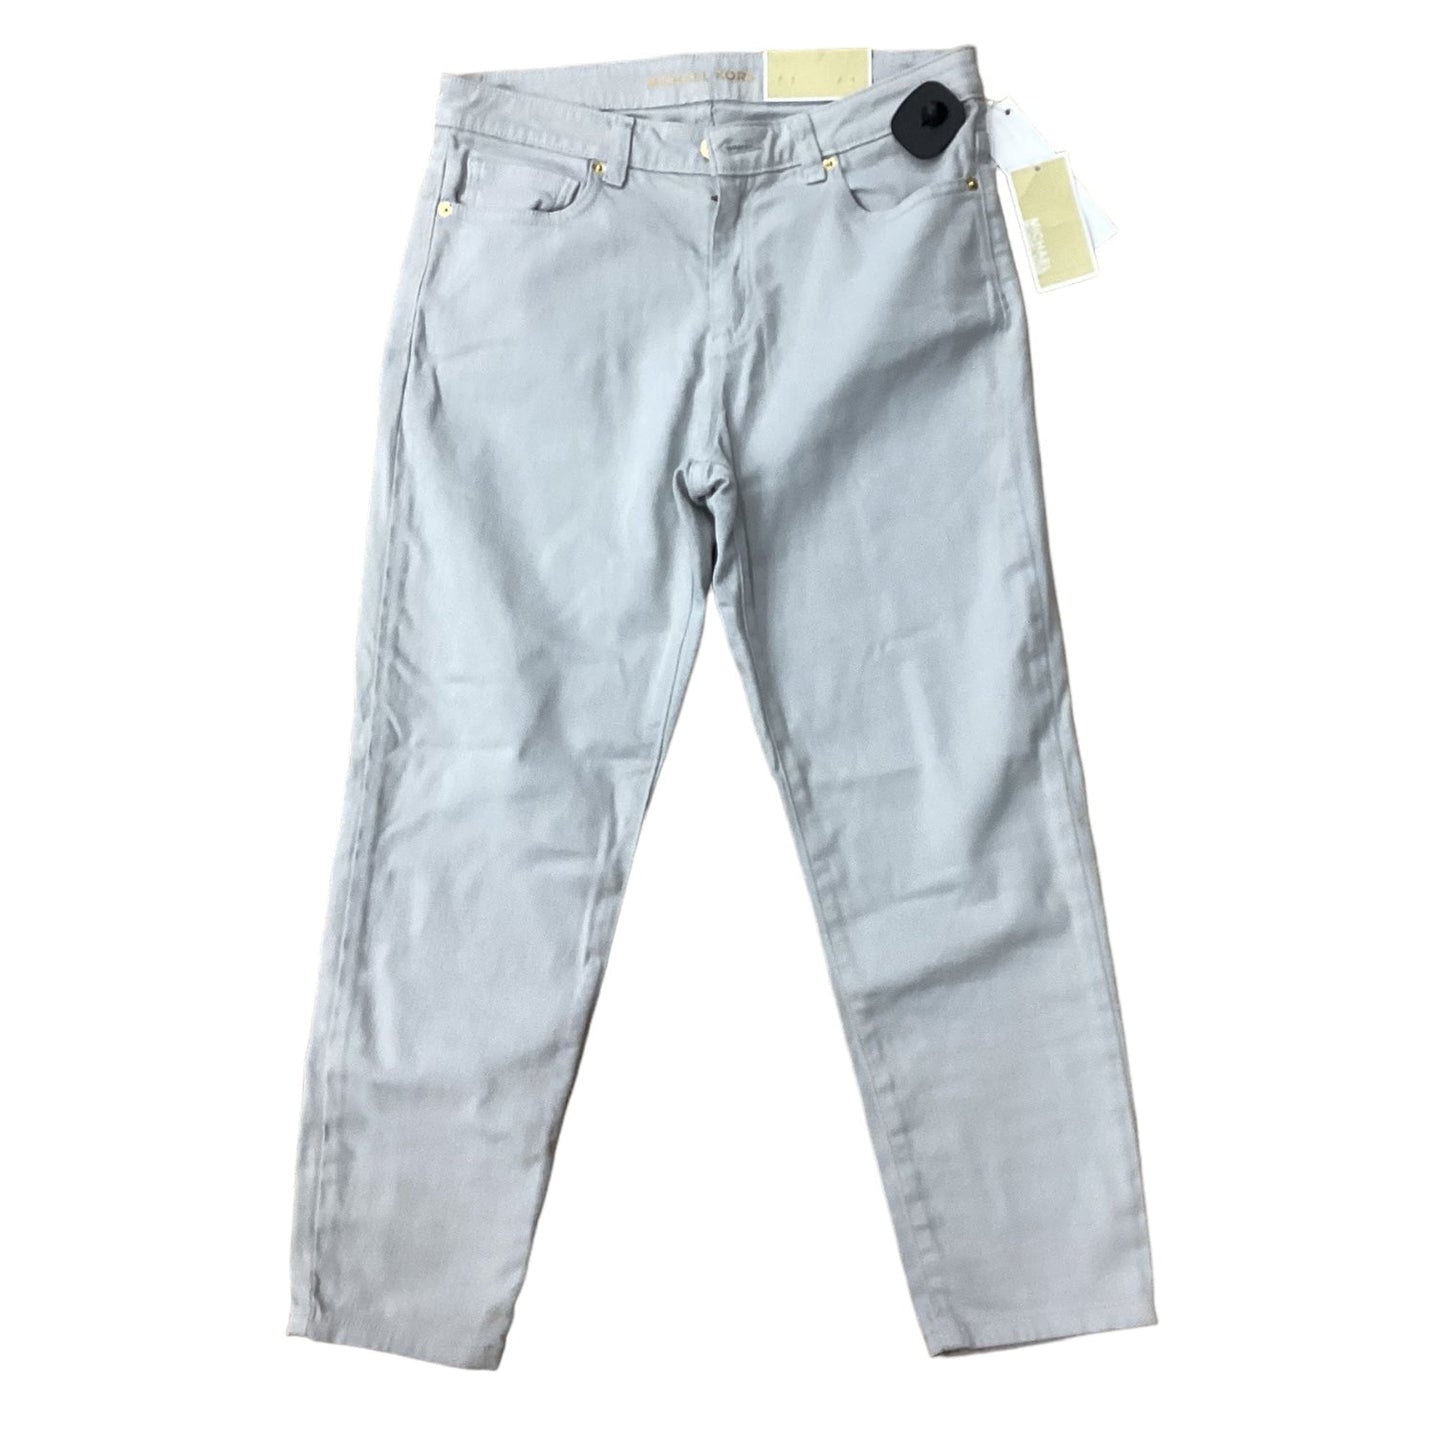 Grey Pants Designer Michael Kors, Size 8